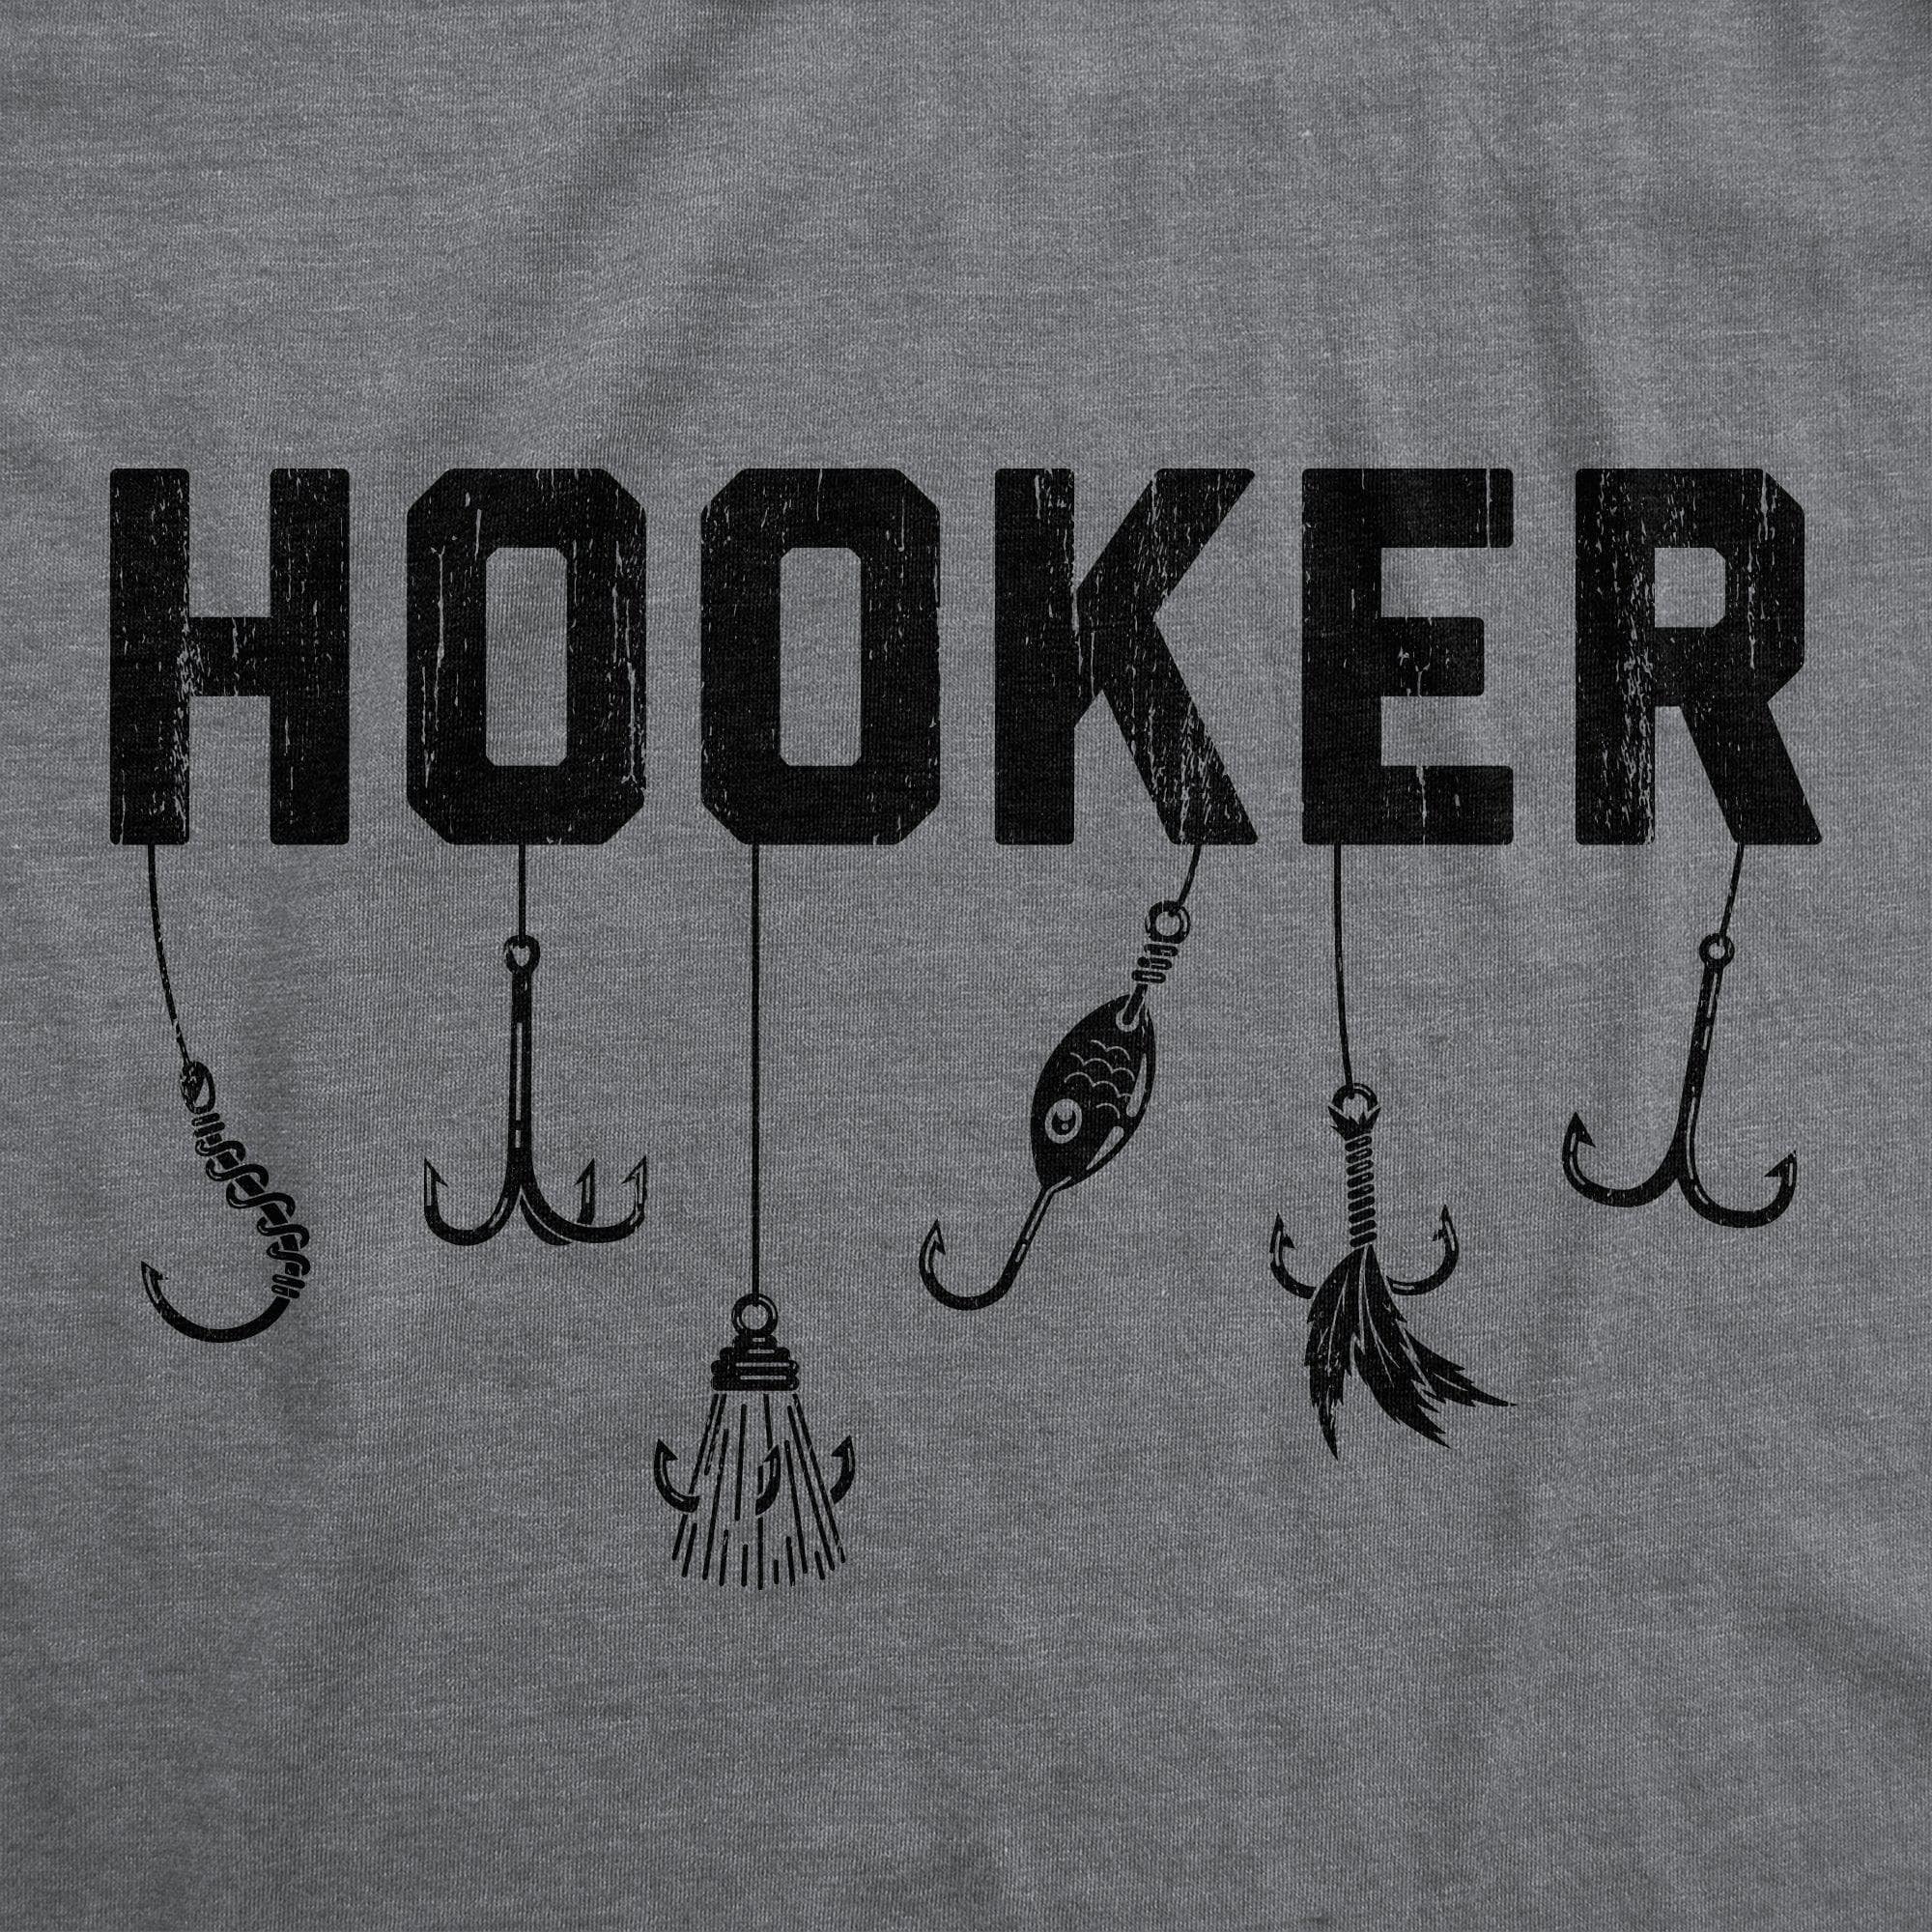 Hooker Men's Tshirt  -  Crazy Dog T-Shirts